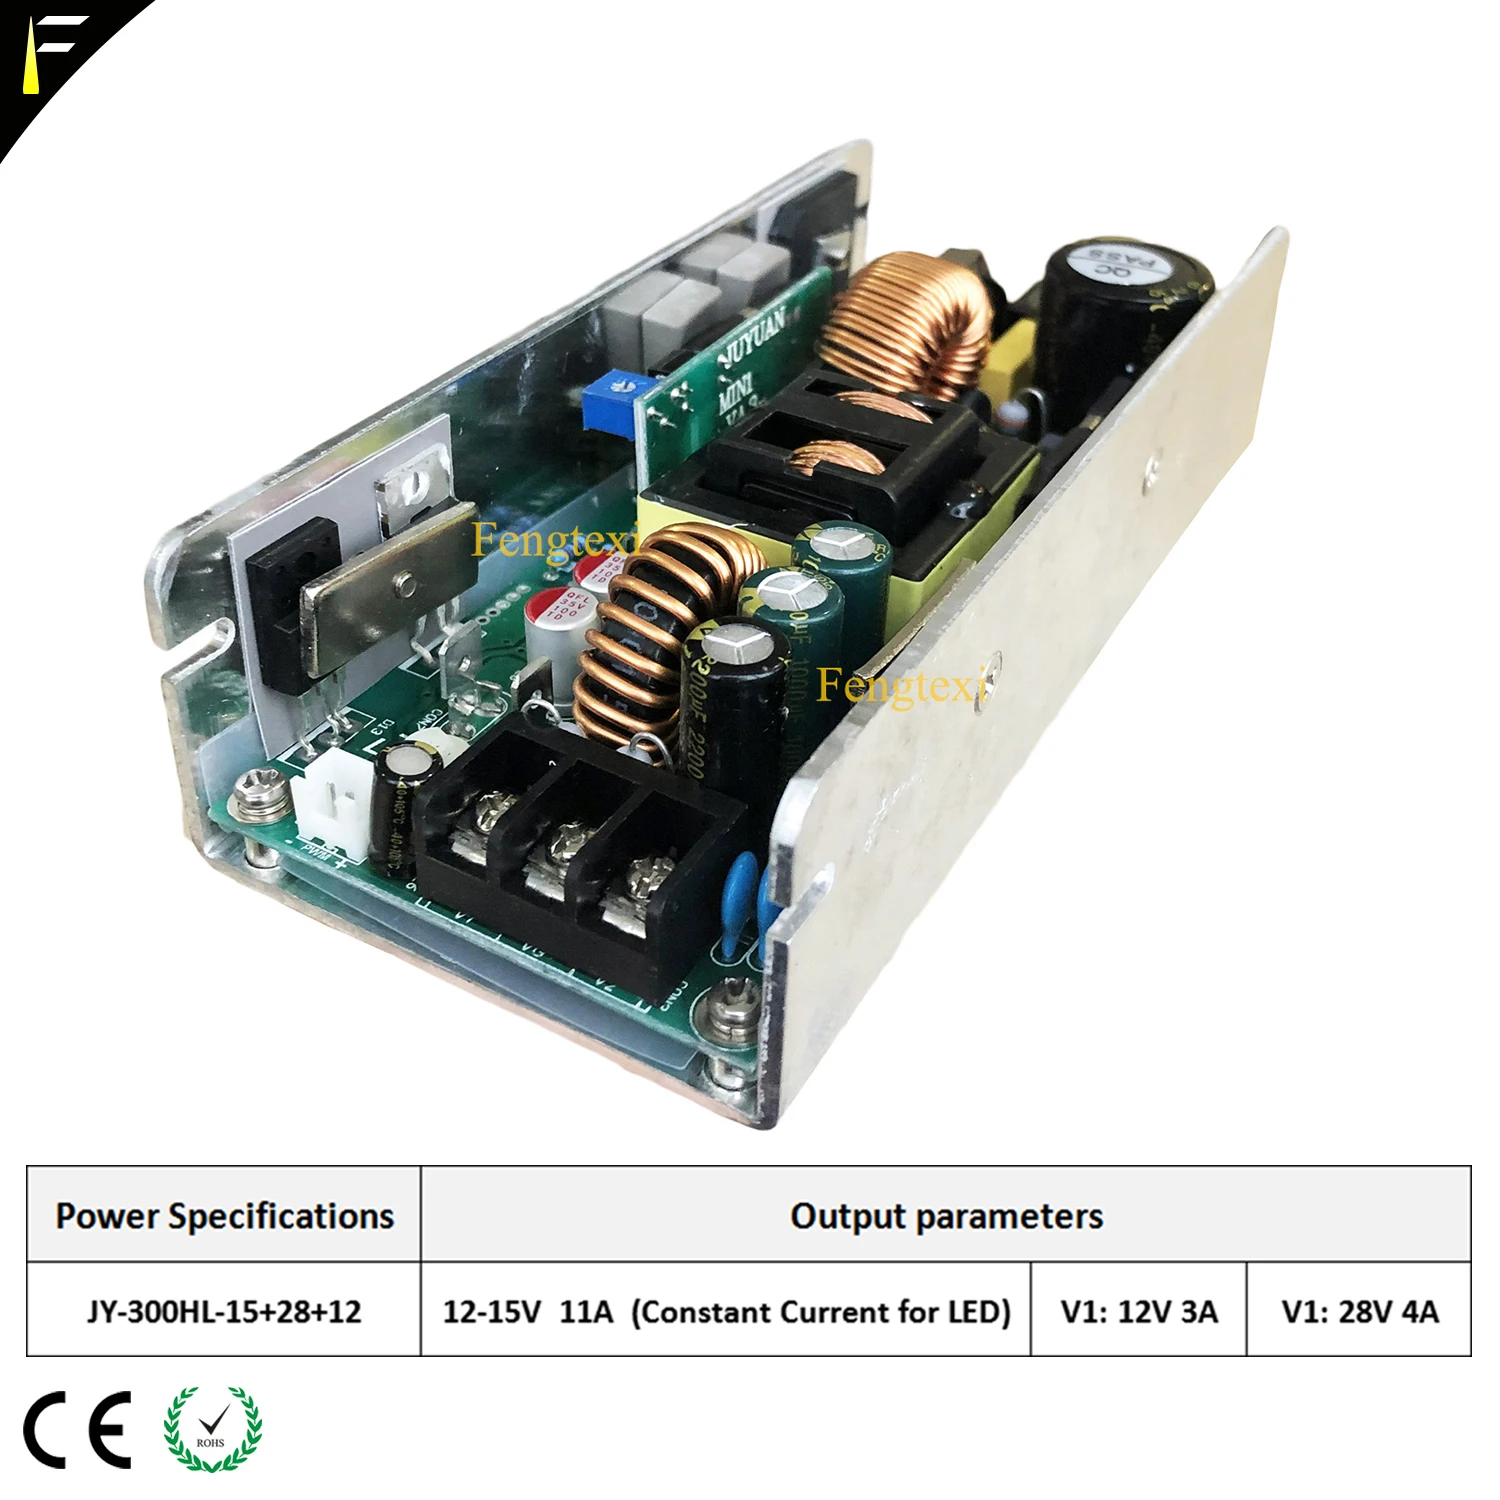 luz-par-de-led-para-palco-cabecote-movel-de-escurecimento-unidade-de-corrente-constante-interruptor-integrado-fonte-de-energia-300w-drive-28-12